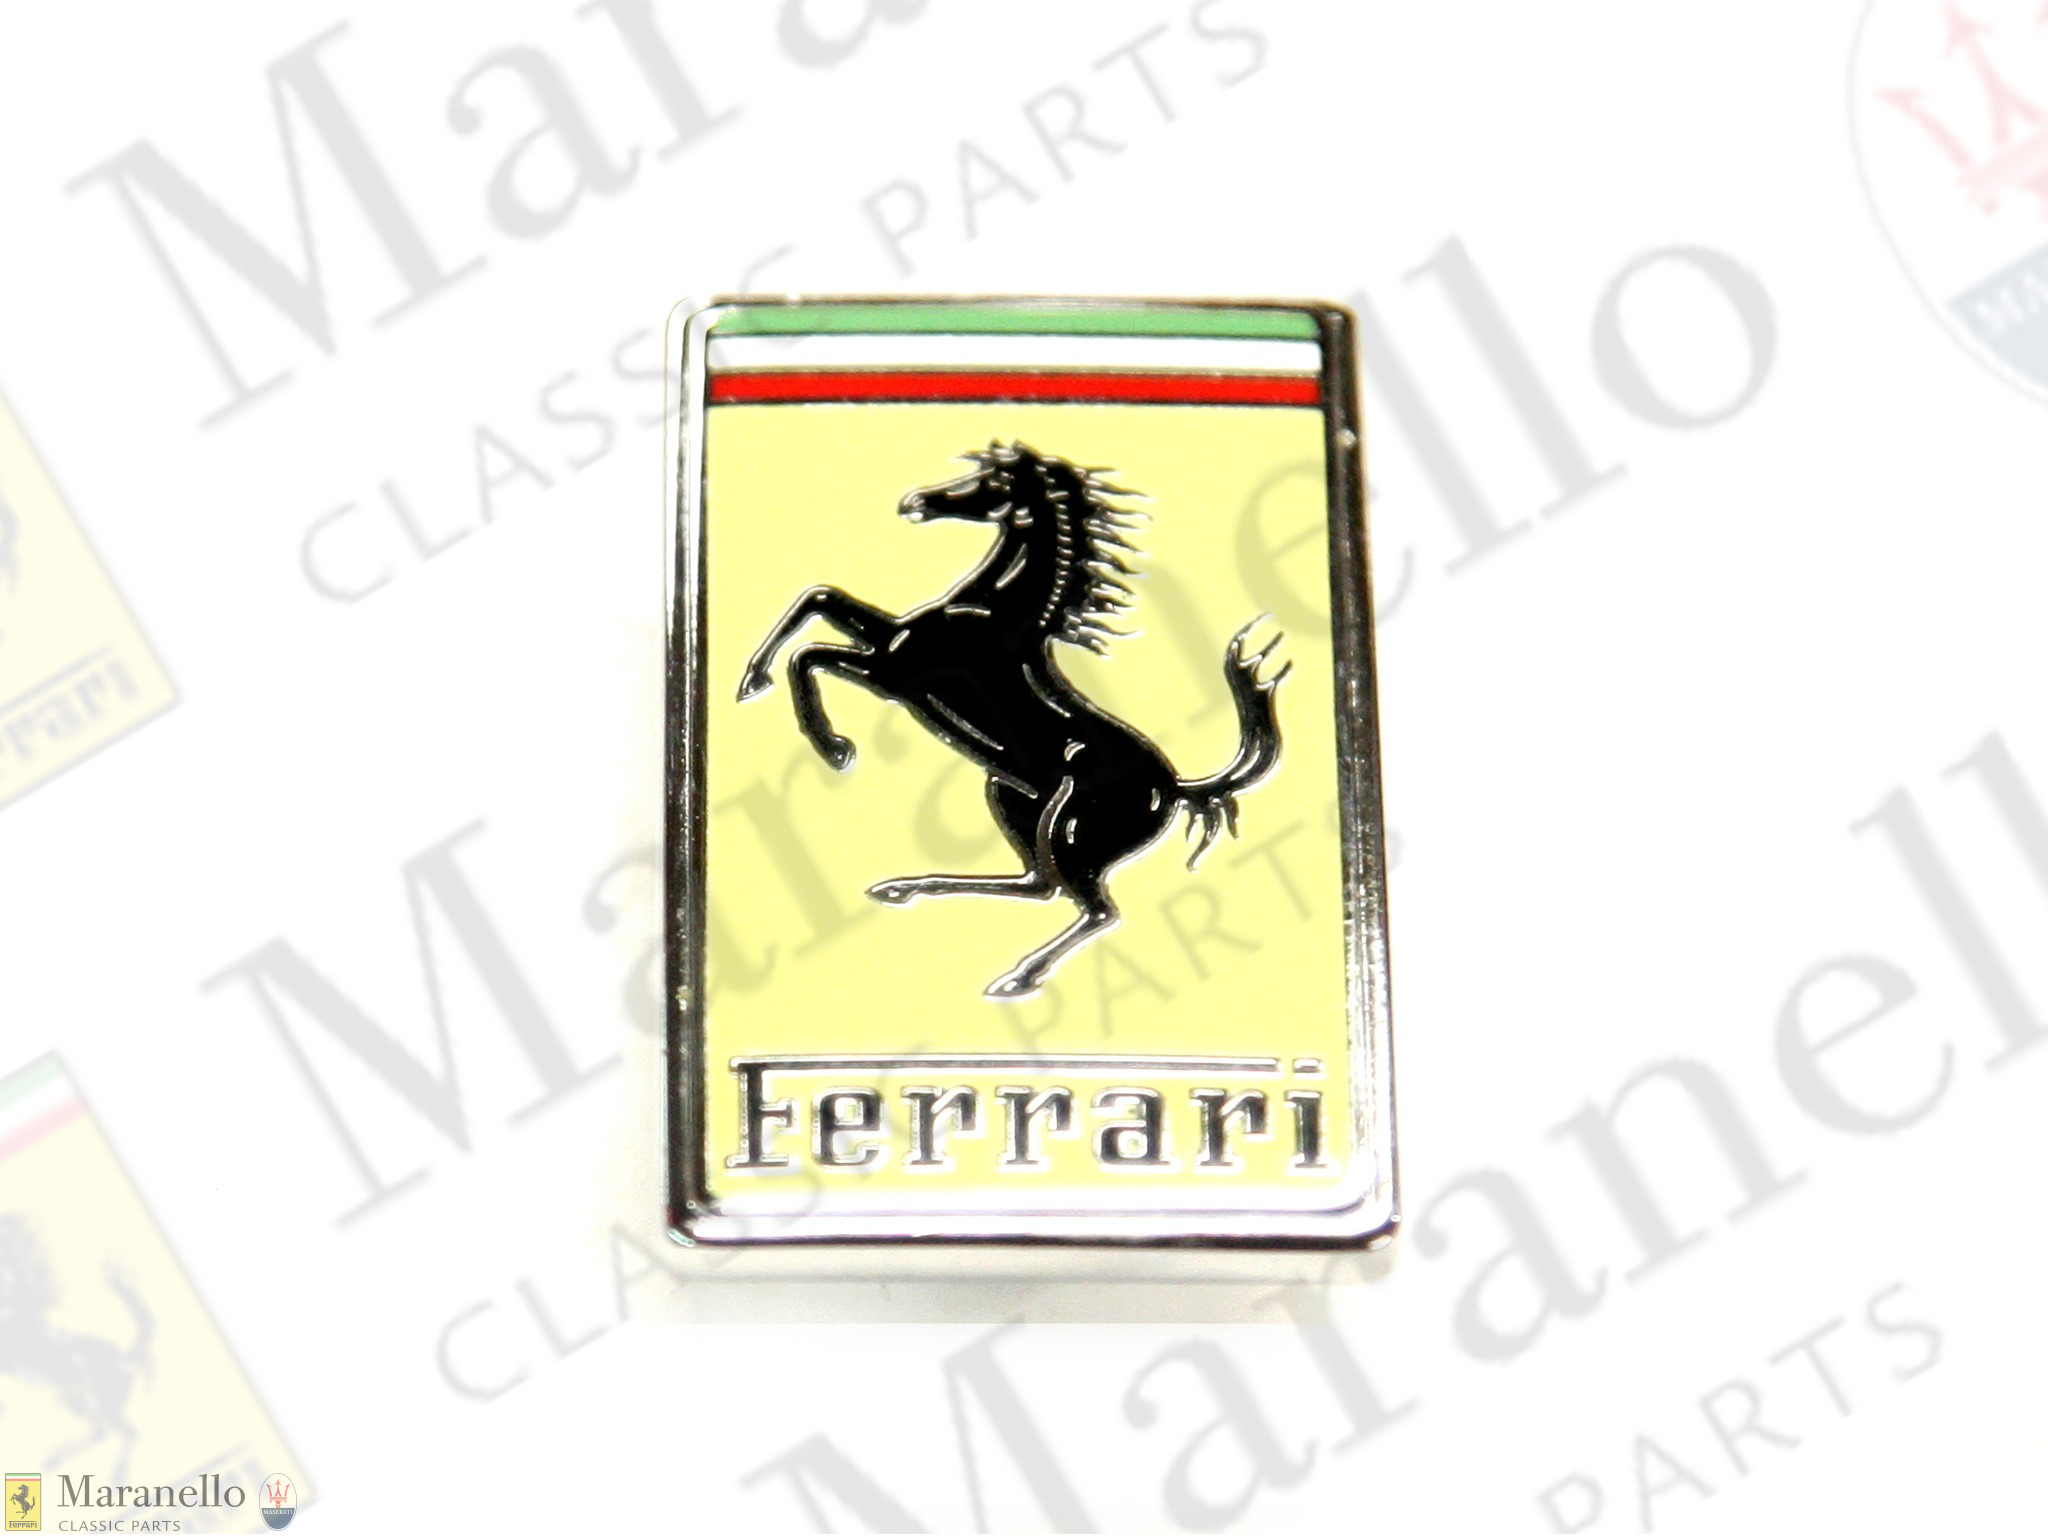 Ferrari part 60795400 - Front Nose Badge | Maranello Classic Parts